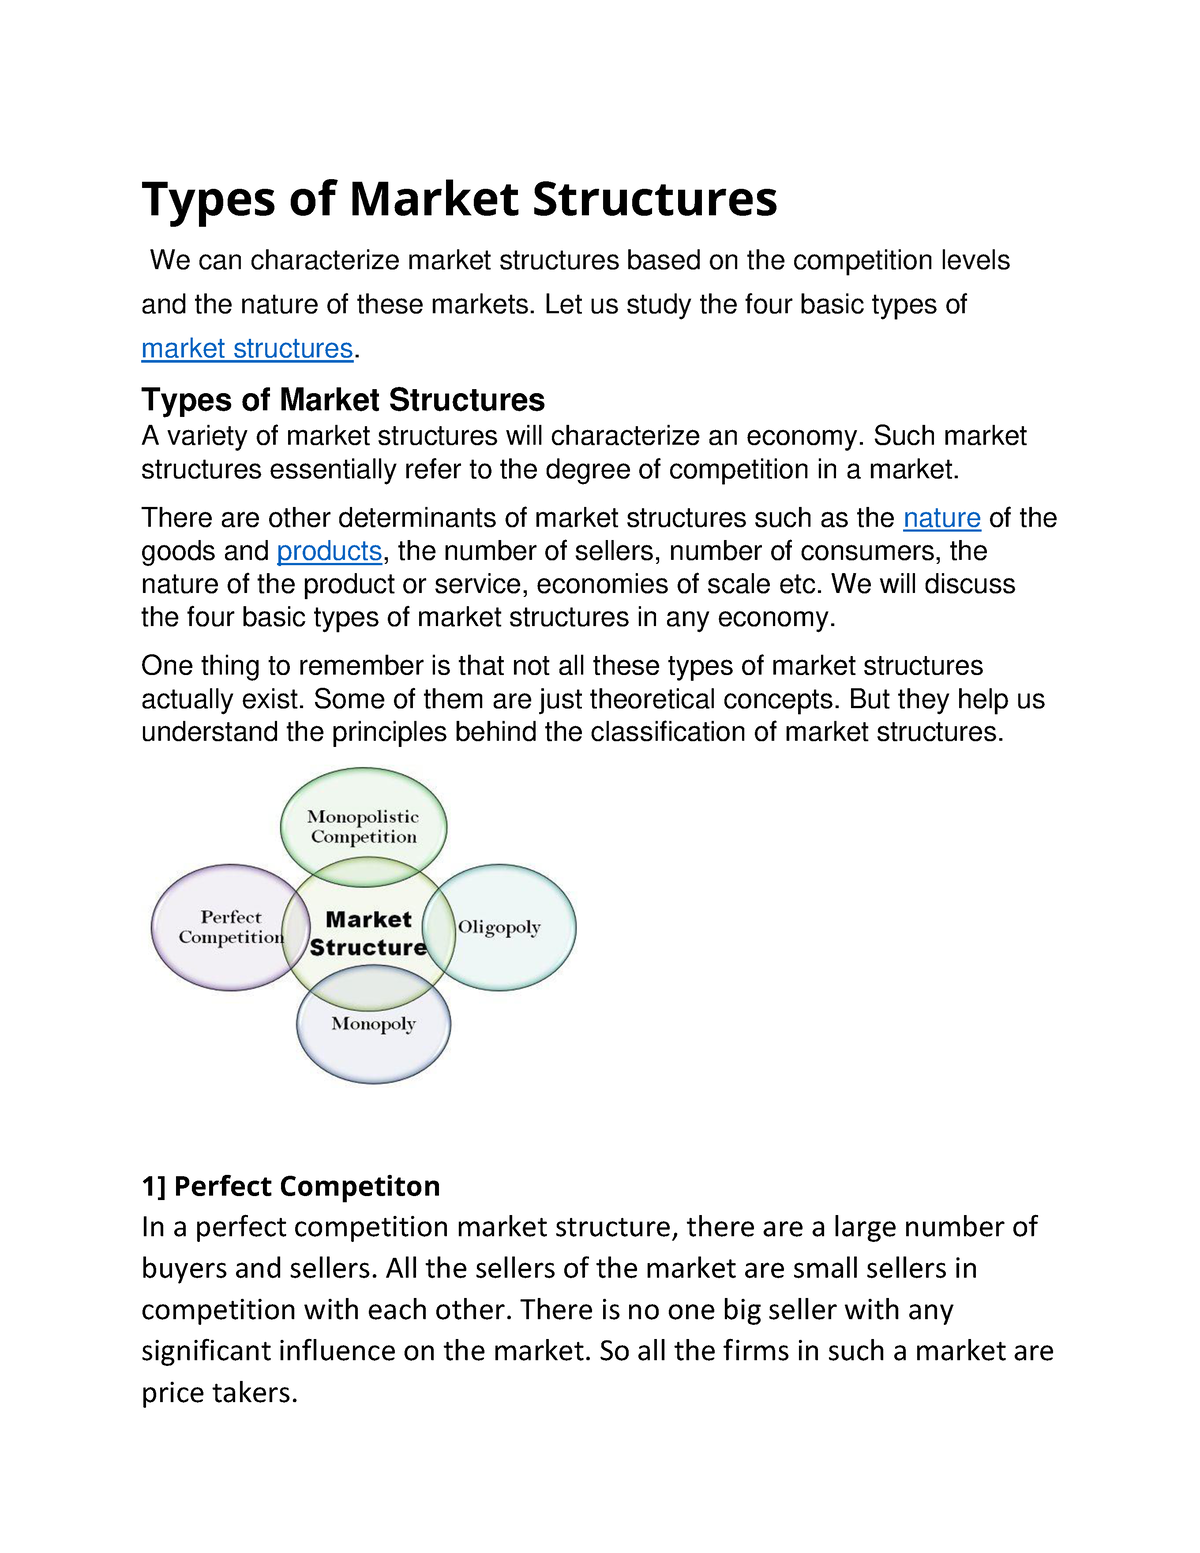 Types of market - Let us study the four basic types of market ...